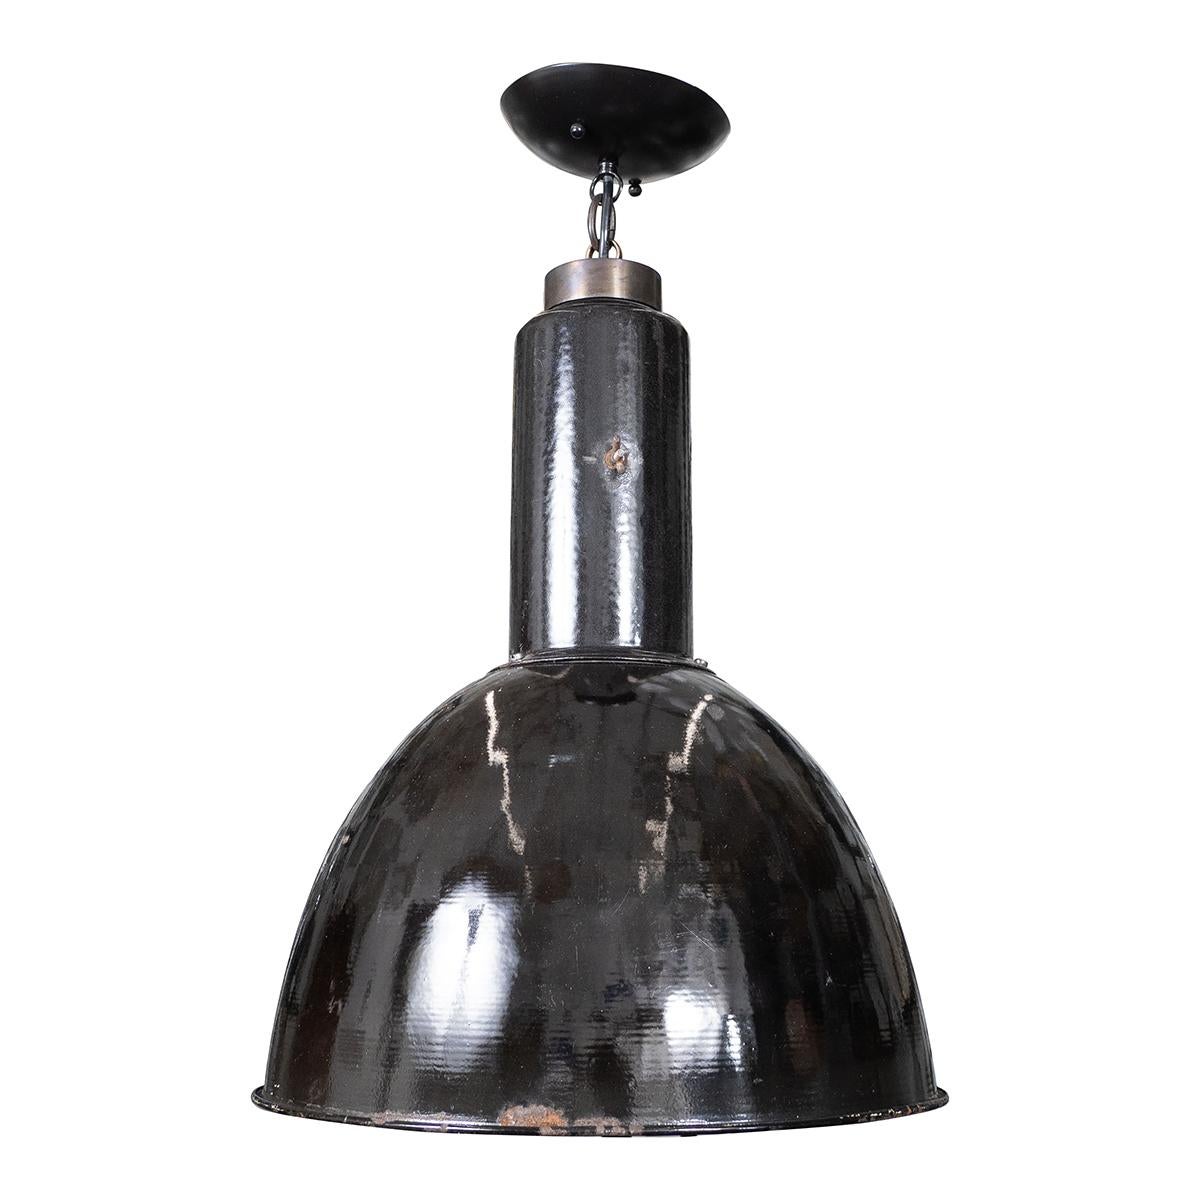 Industrial style, black enameled pendant light fixture.